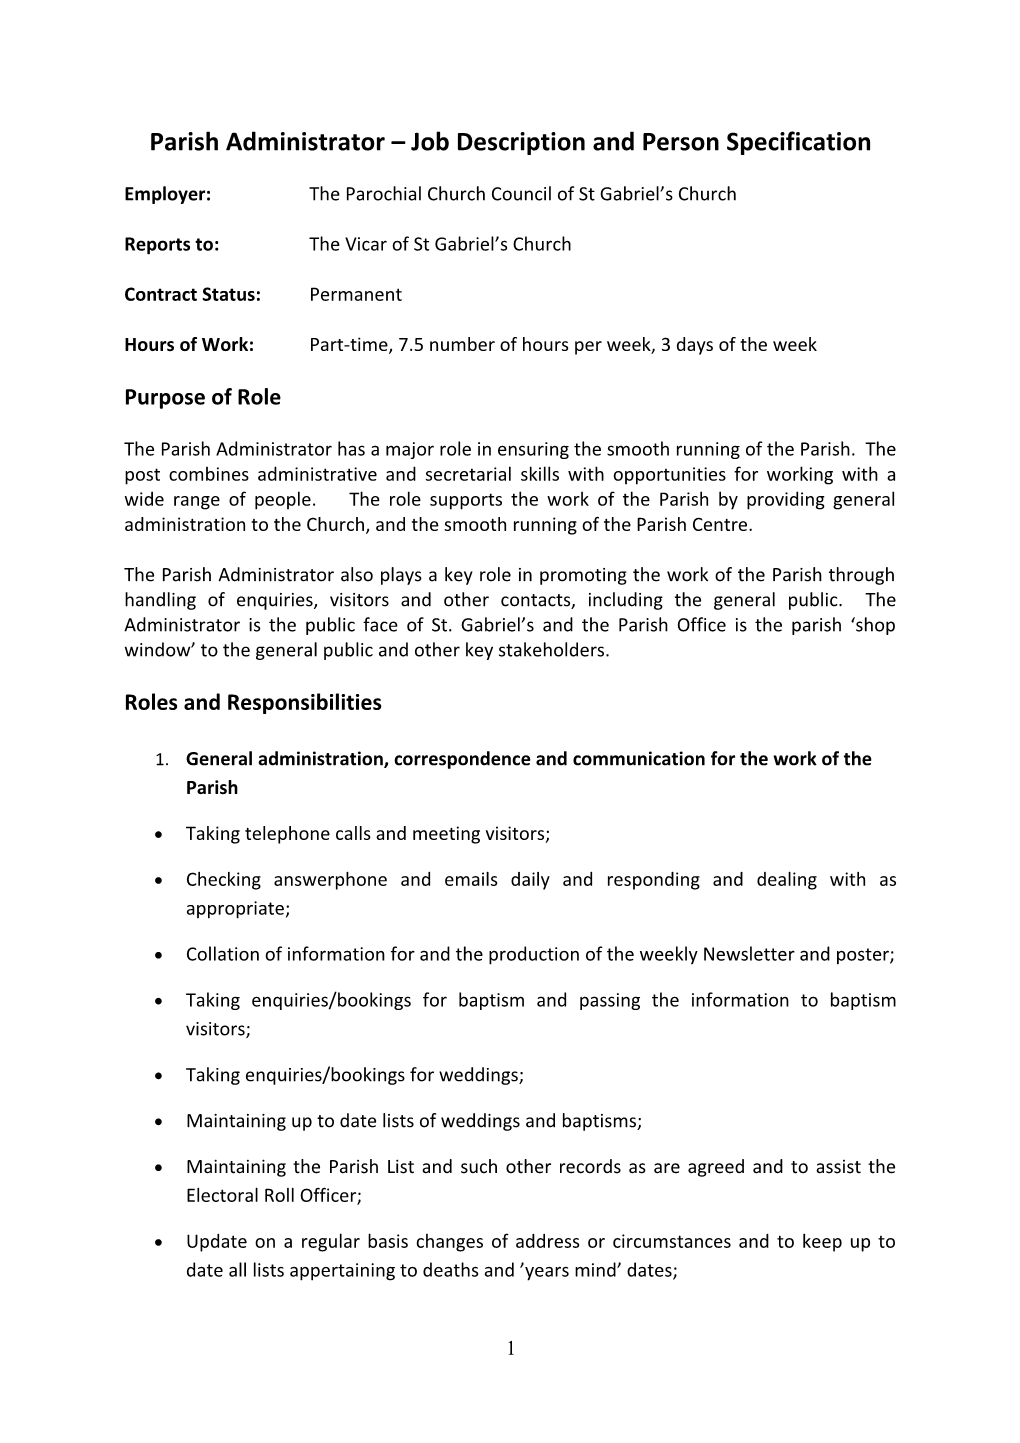 Parish Administrator Job Description and Person Specification